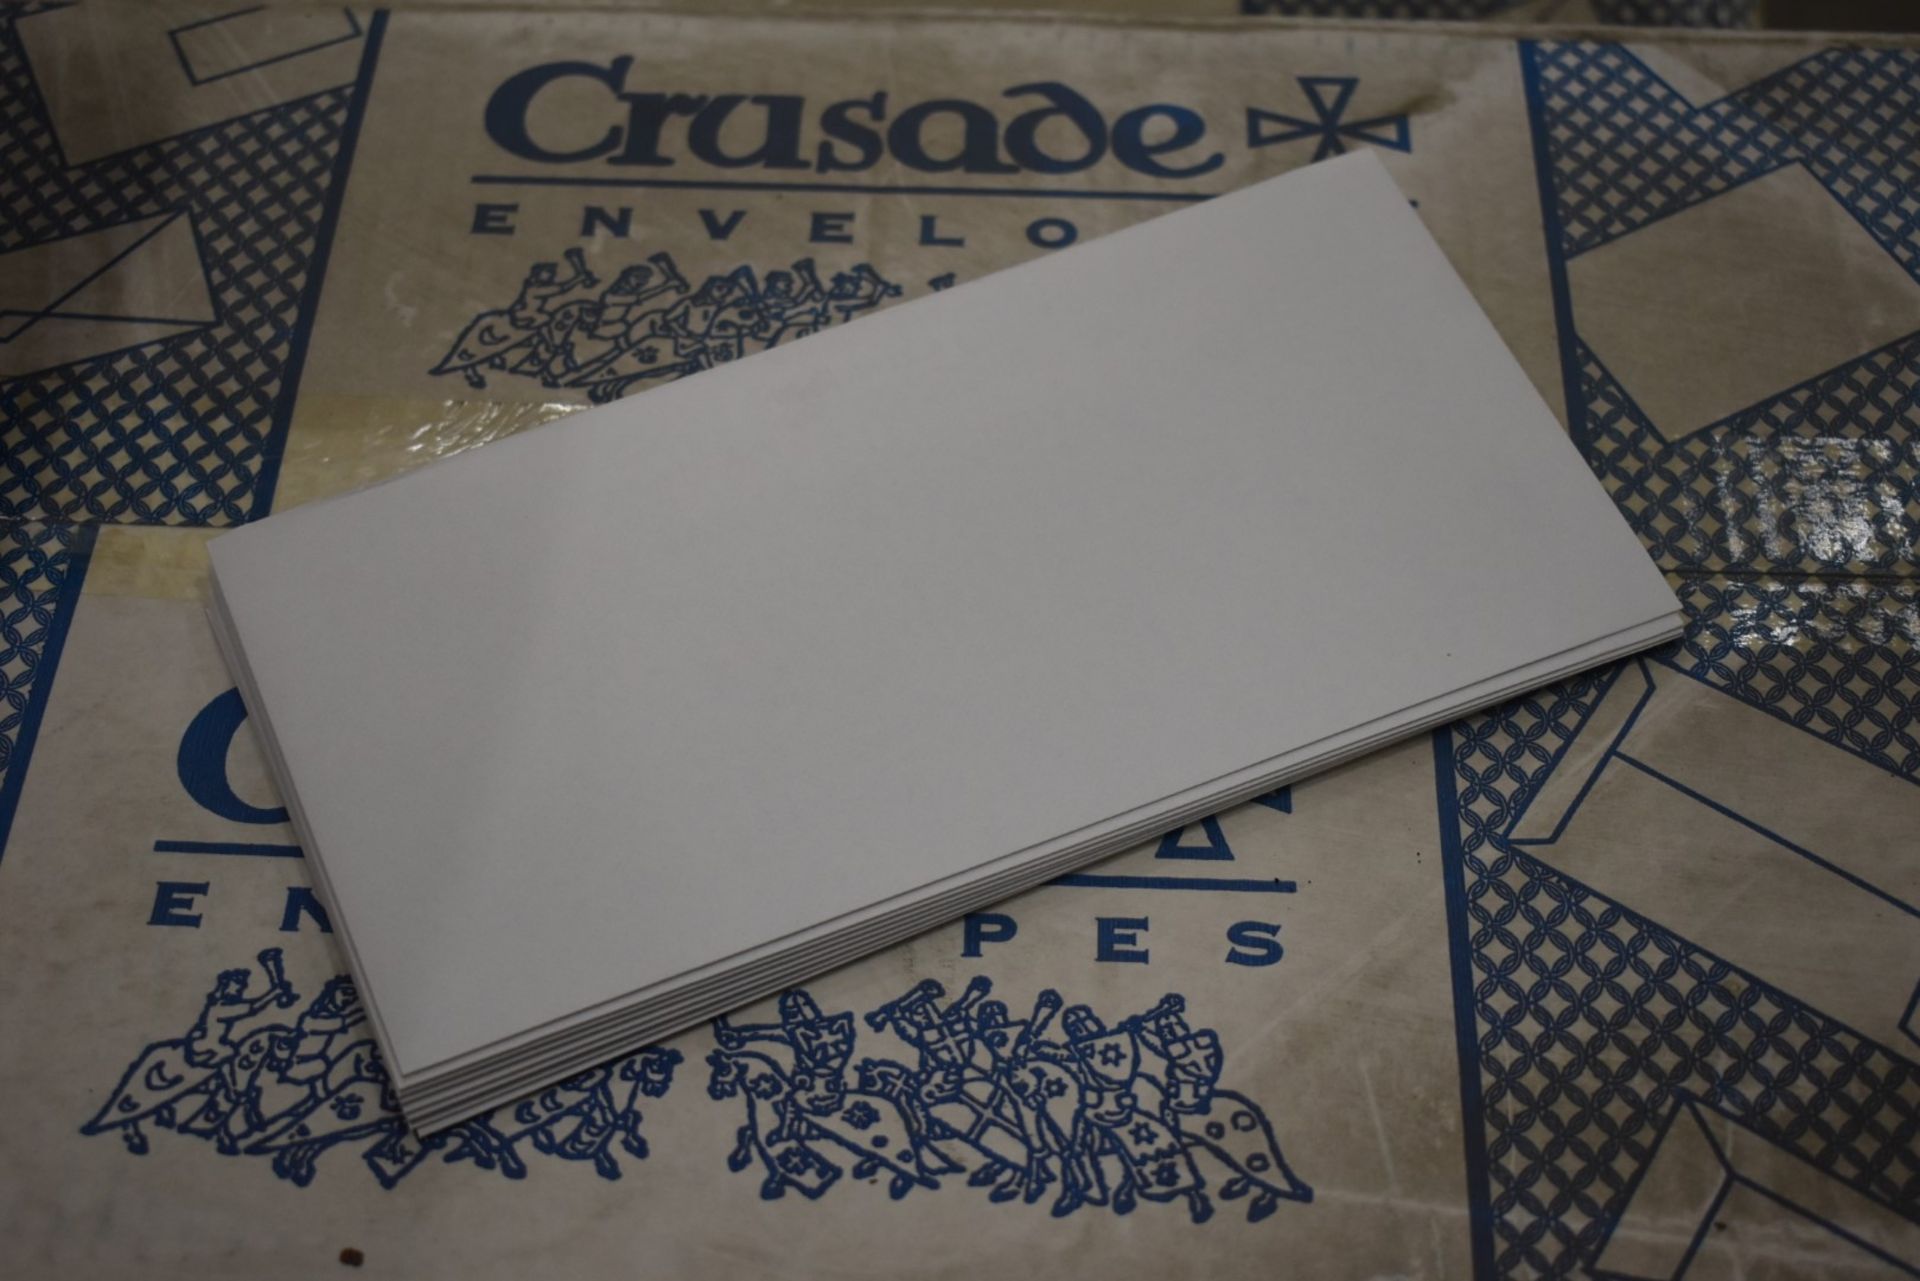 22 x Boxes of Crusade 90gsm Plain Gummed White Envelopes - Each Box Contains 1,000 Envelopes - Ref